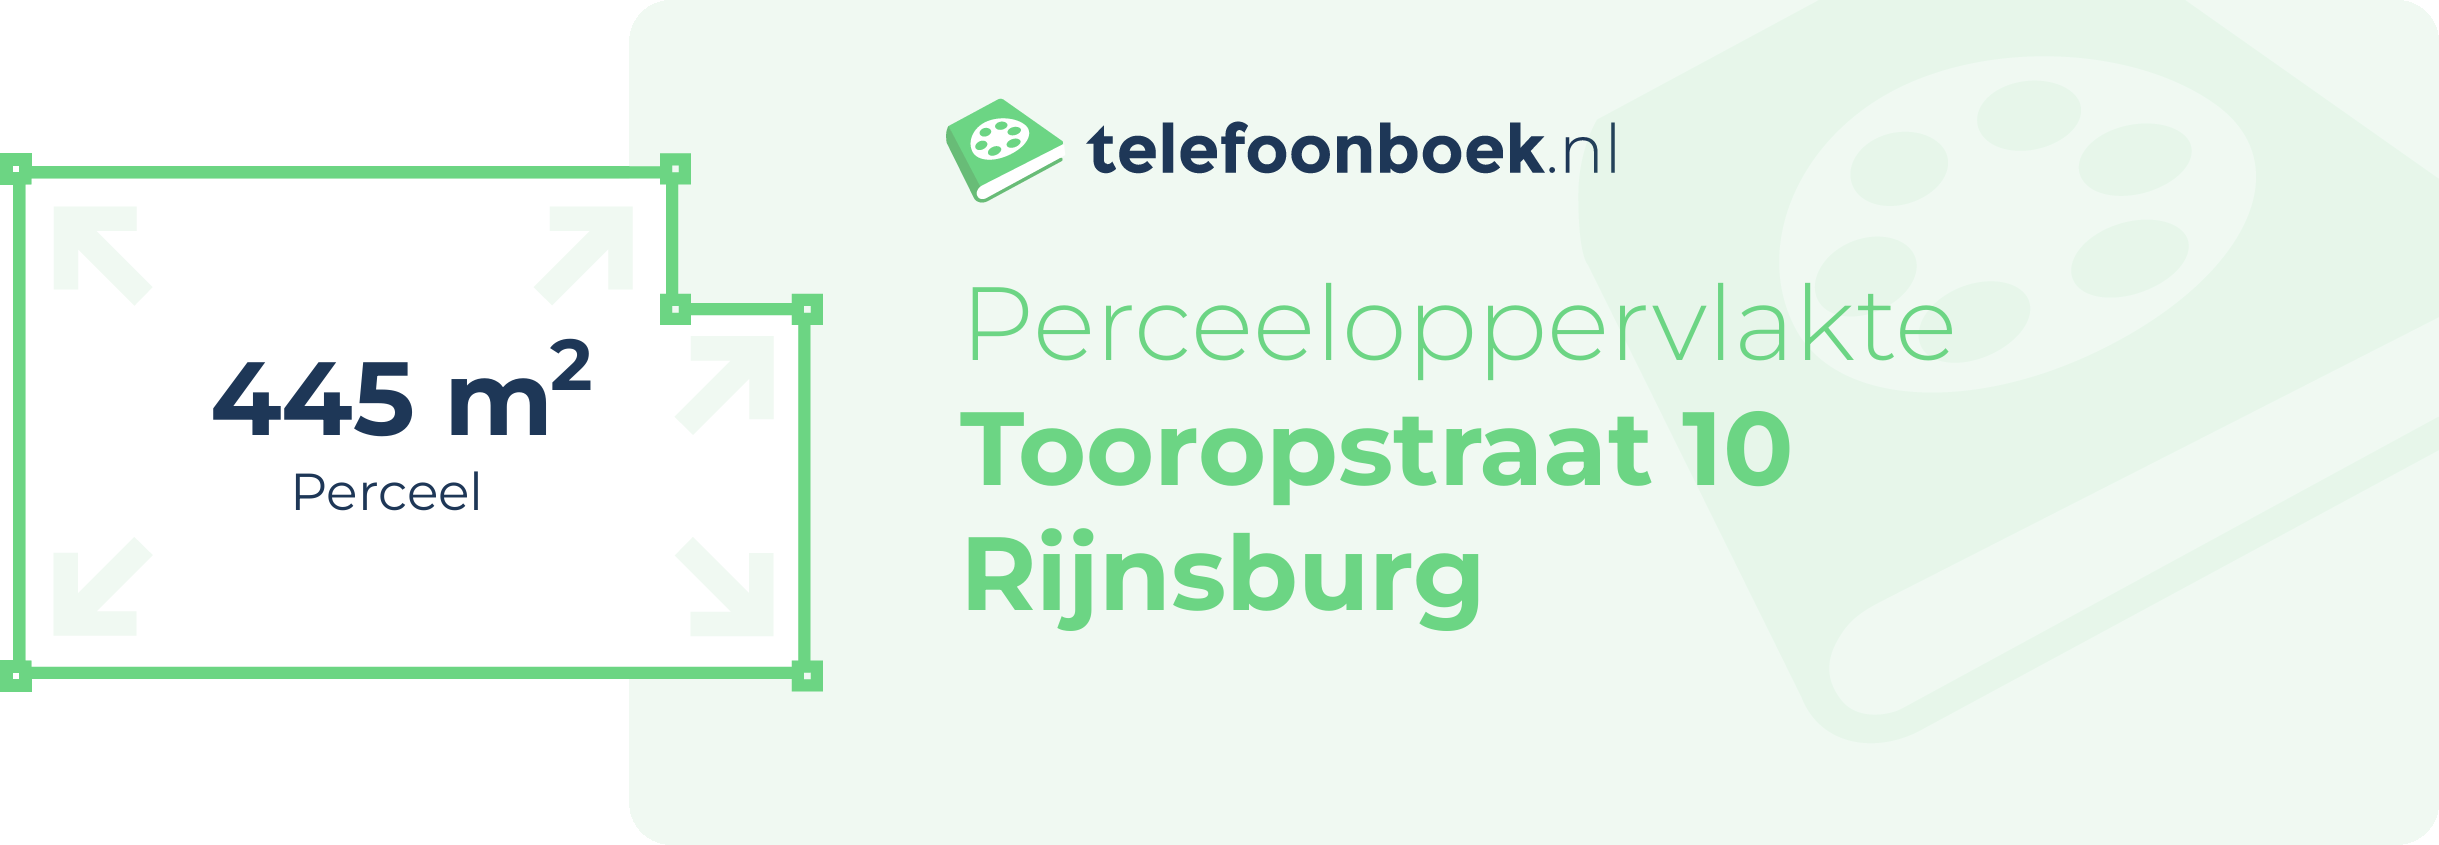 Perceeloppervlakte Tooropstraat 10 Rijnsburg